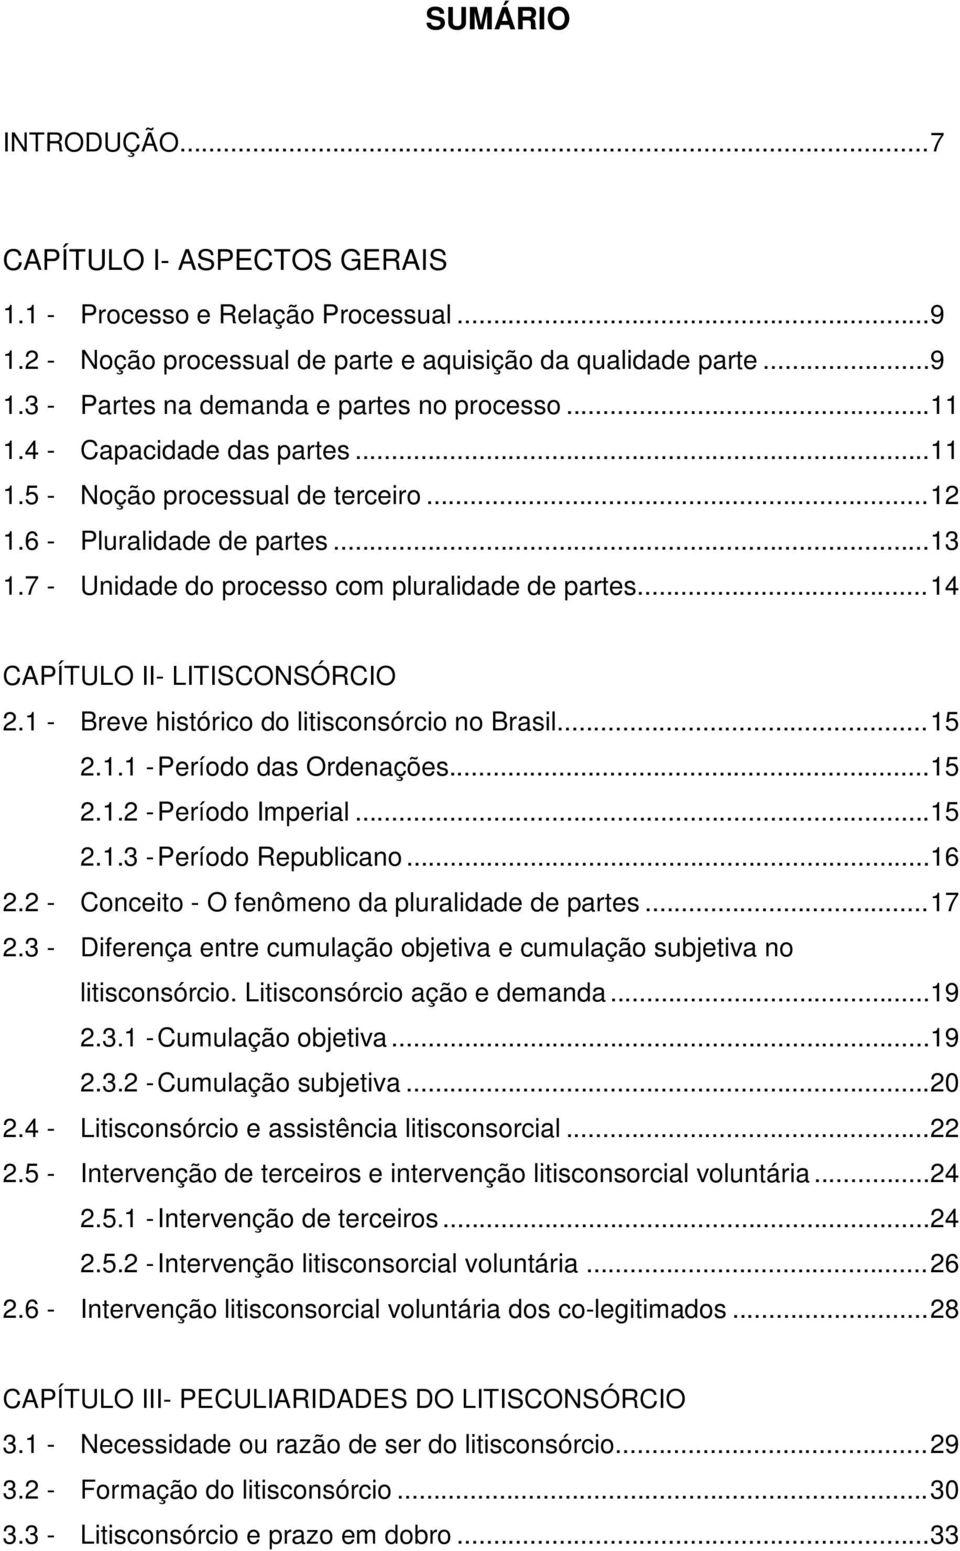 1 - Breve histórico do litisconsórcio no Brasil...15 2.1.1 -Período das Ordenações...15 2.1.2 -Período Imperial...15 2.1.3 -Período Republicano...16 2.